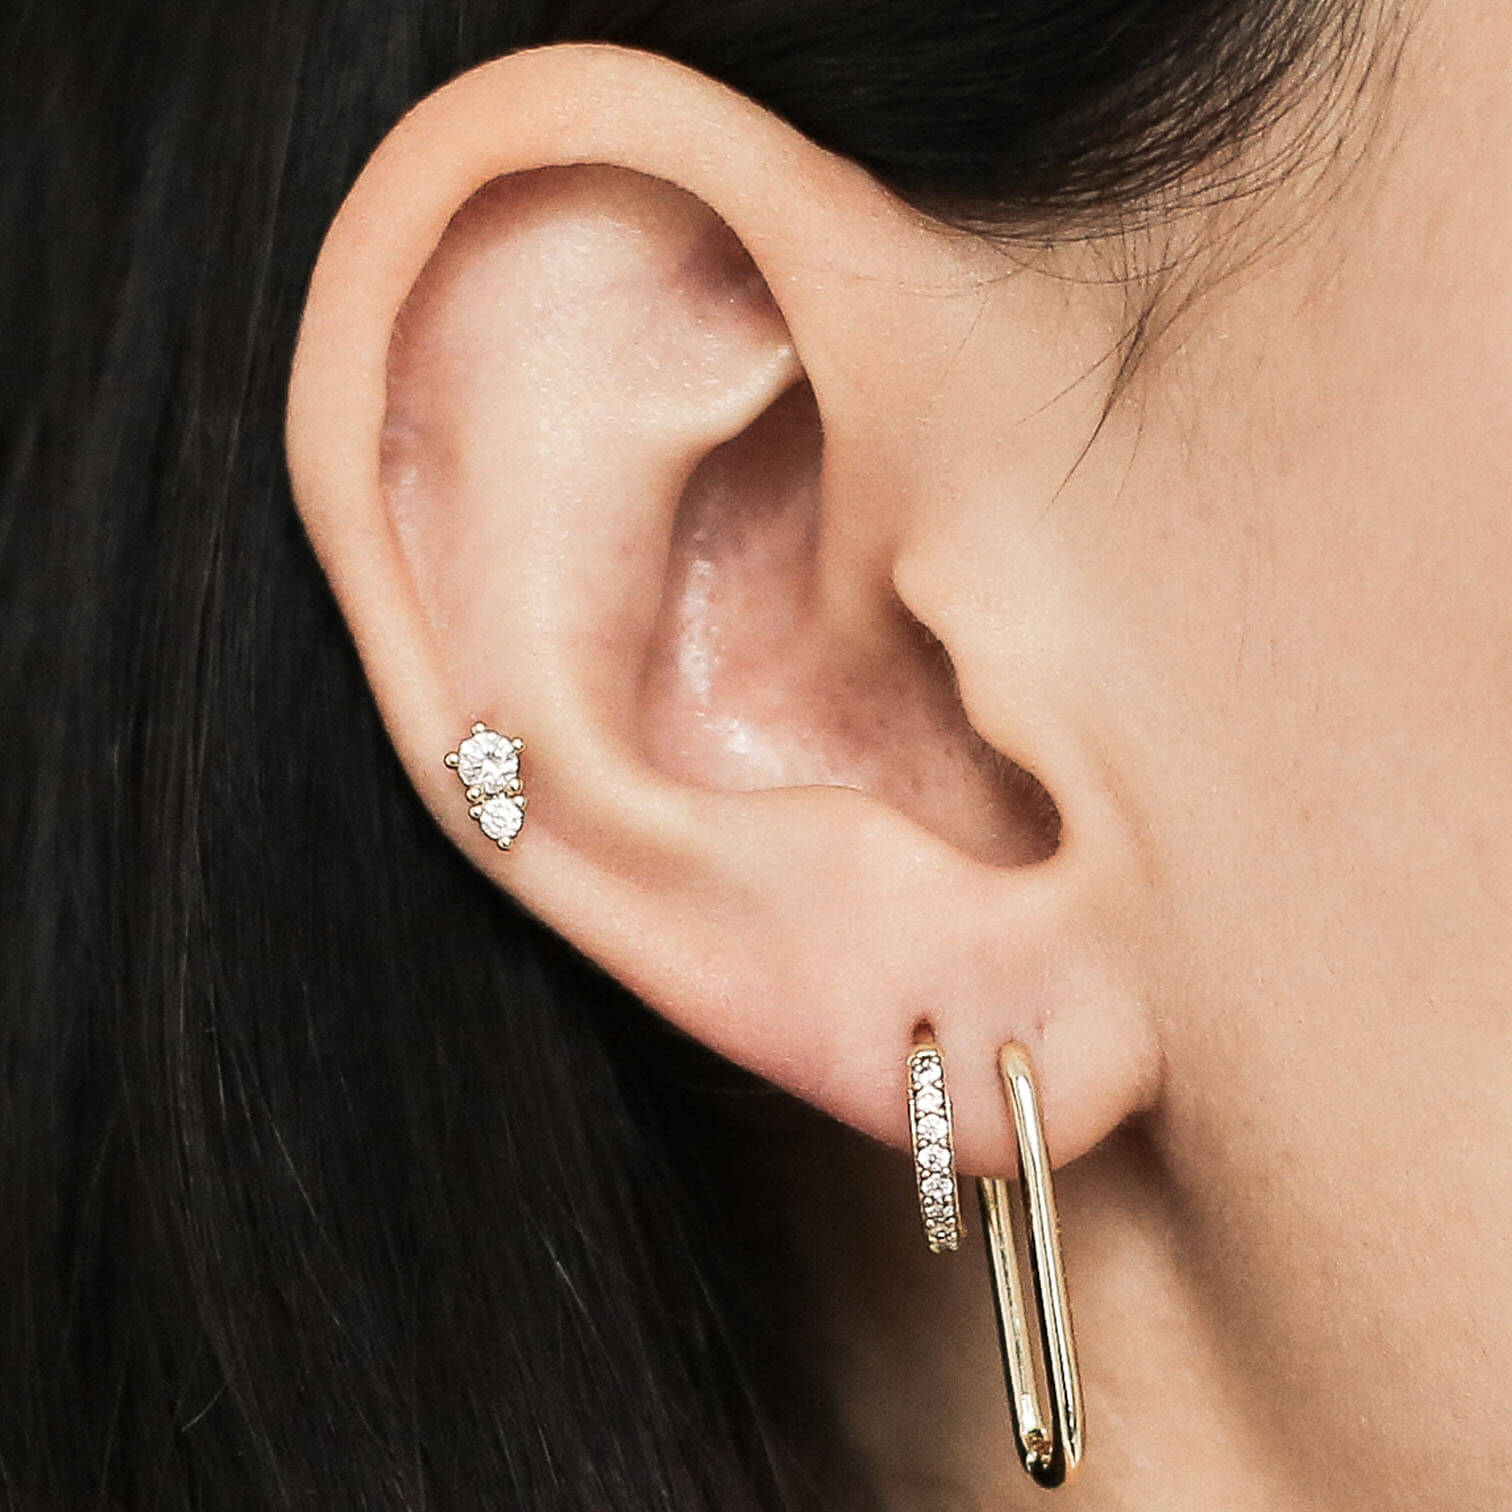  Solid Sterling Silver Extra Wide Orbital Ear Cuff Earring for  Men. Conch Cuff Earring for Non-pierced Ears. Ear Wrap. : Handmade Products